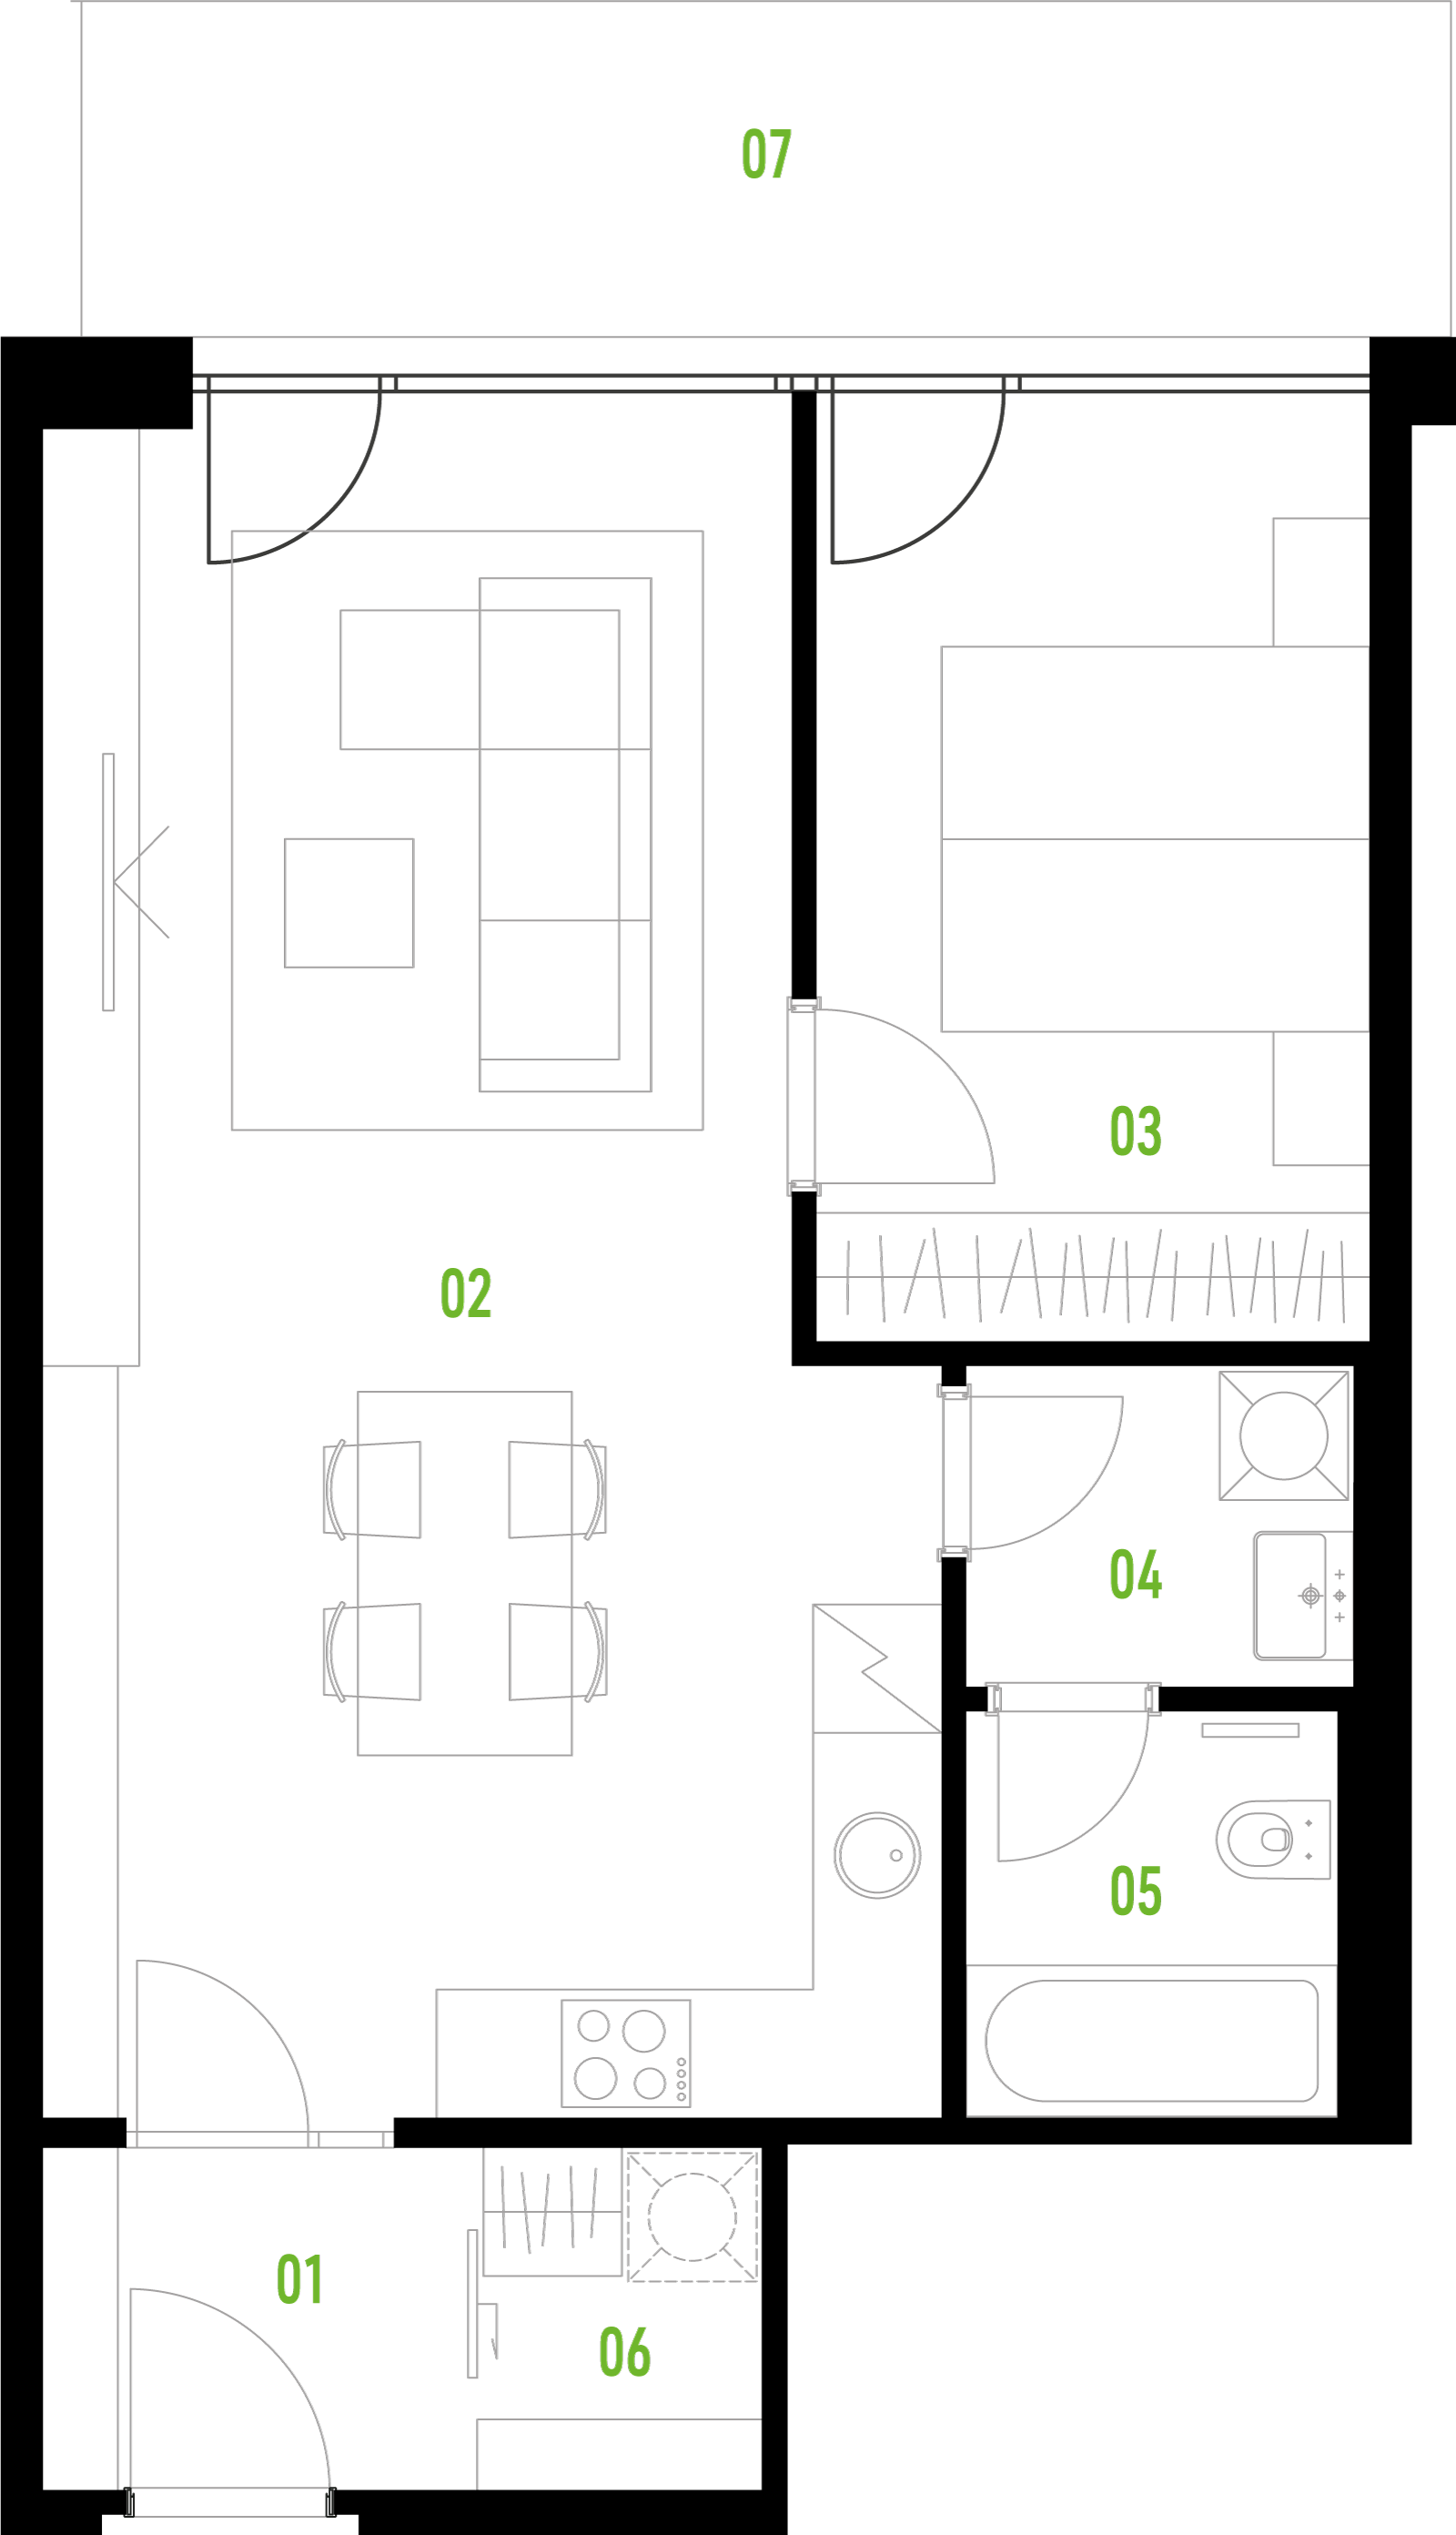 A14 floor plan